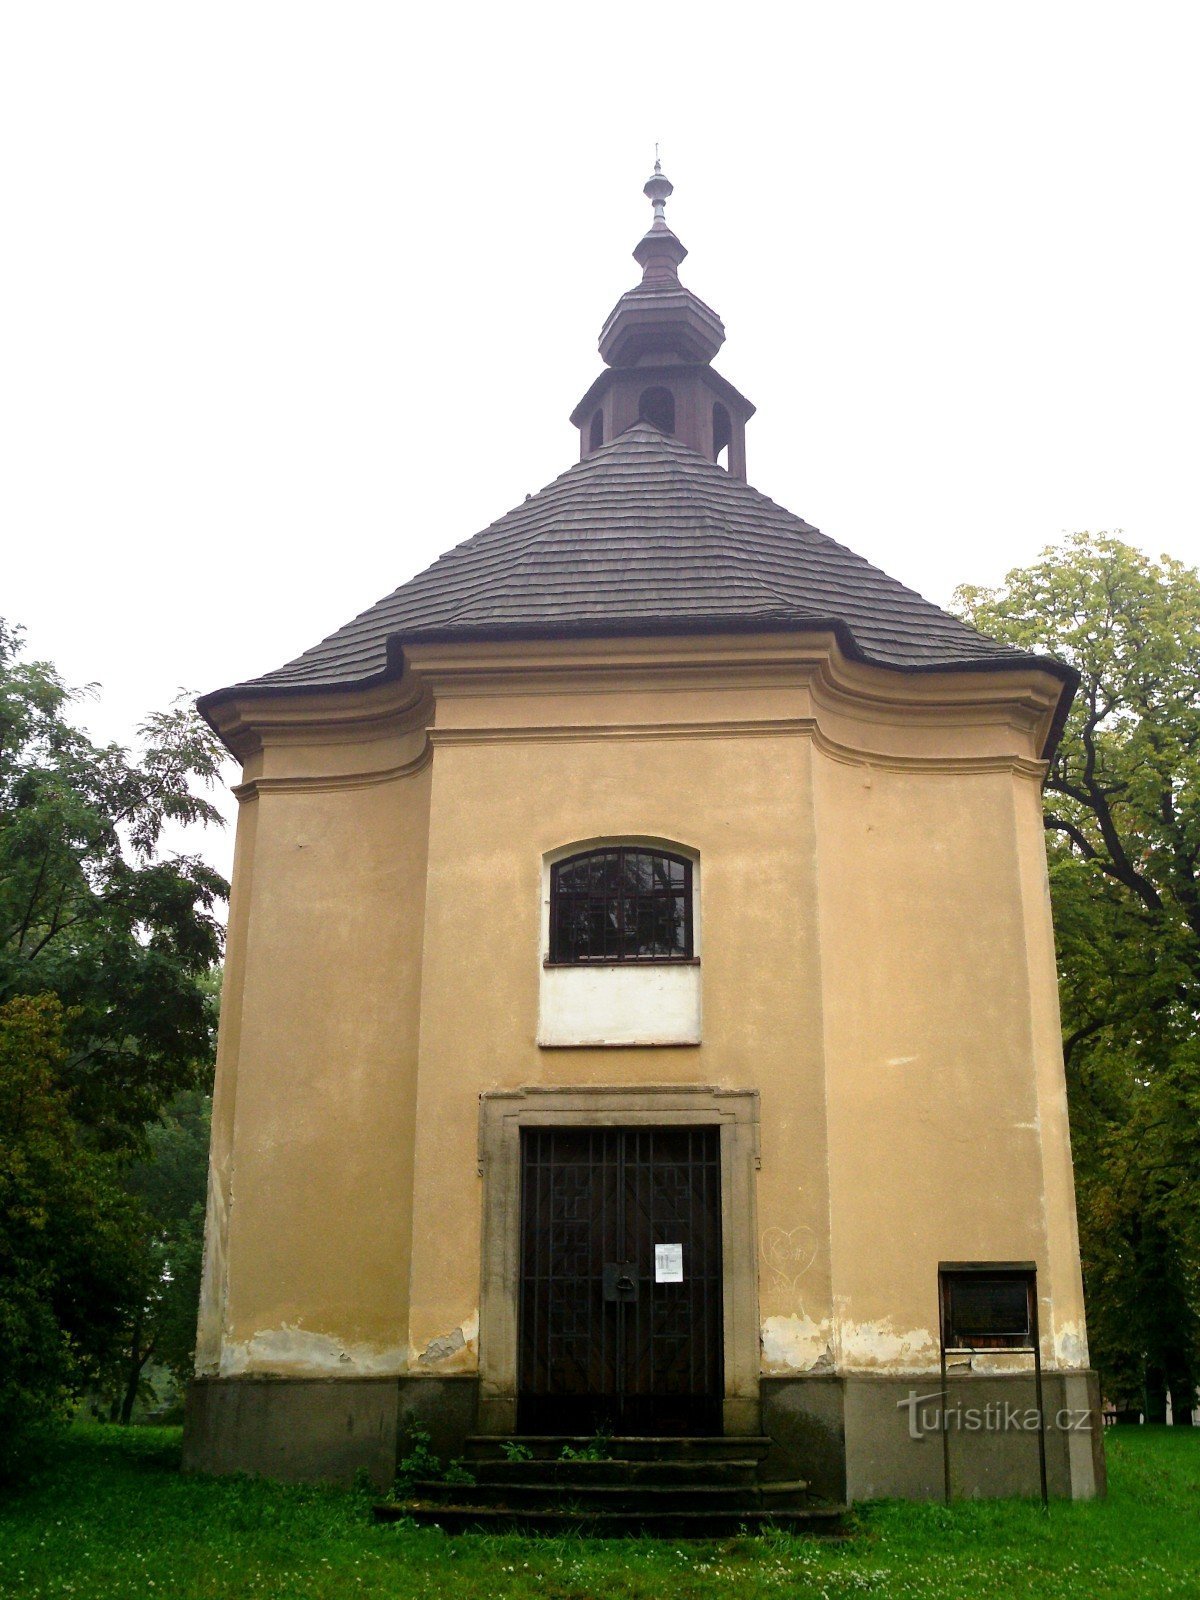 Bystřice pod Hostýnem - capela de St. Lourenço